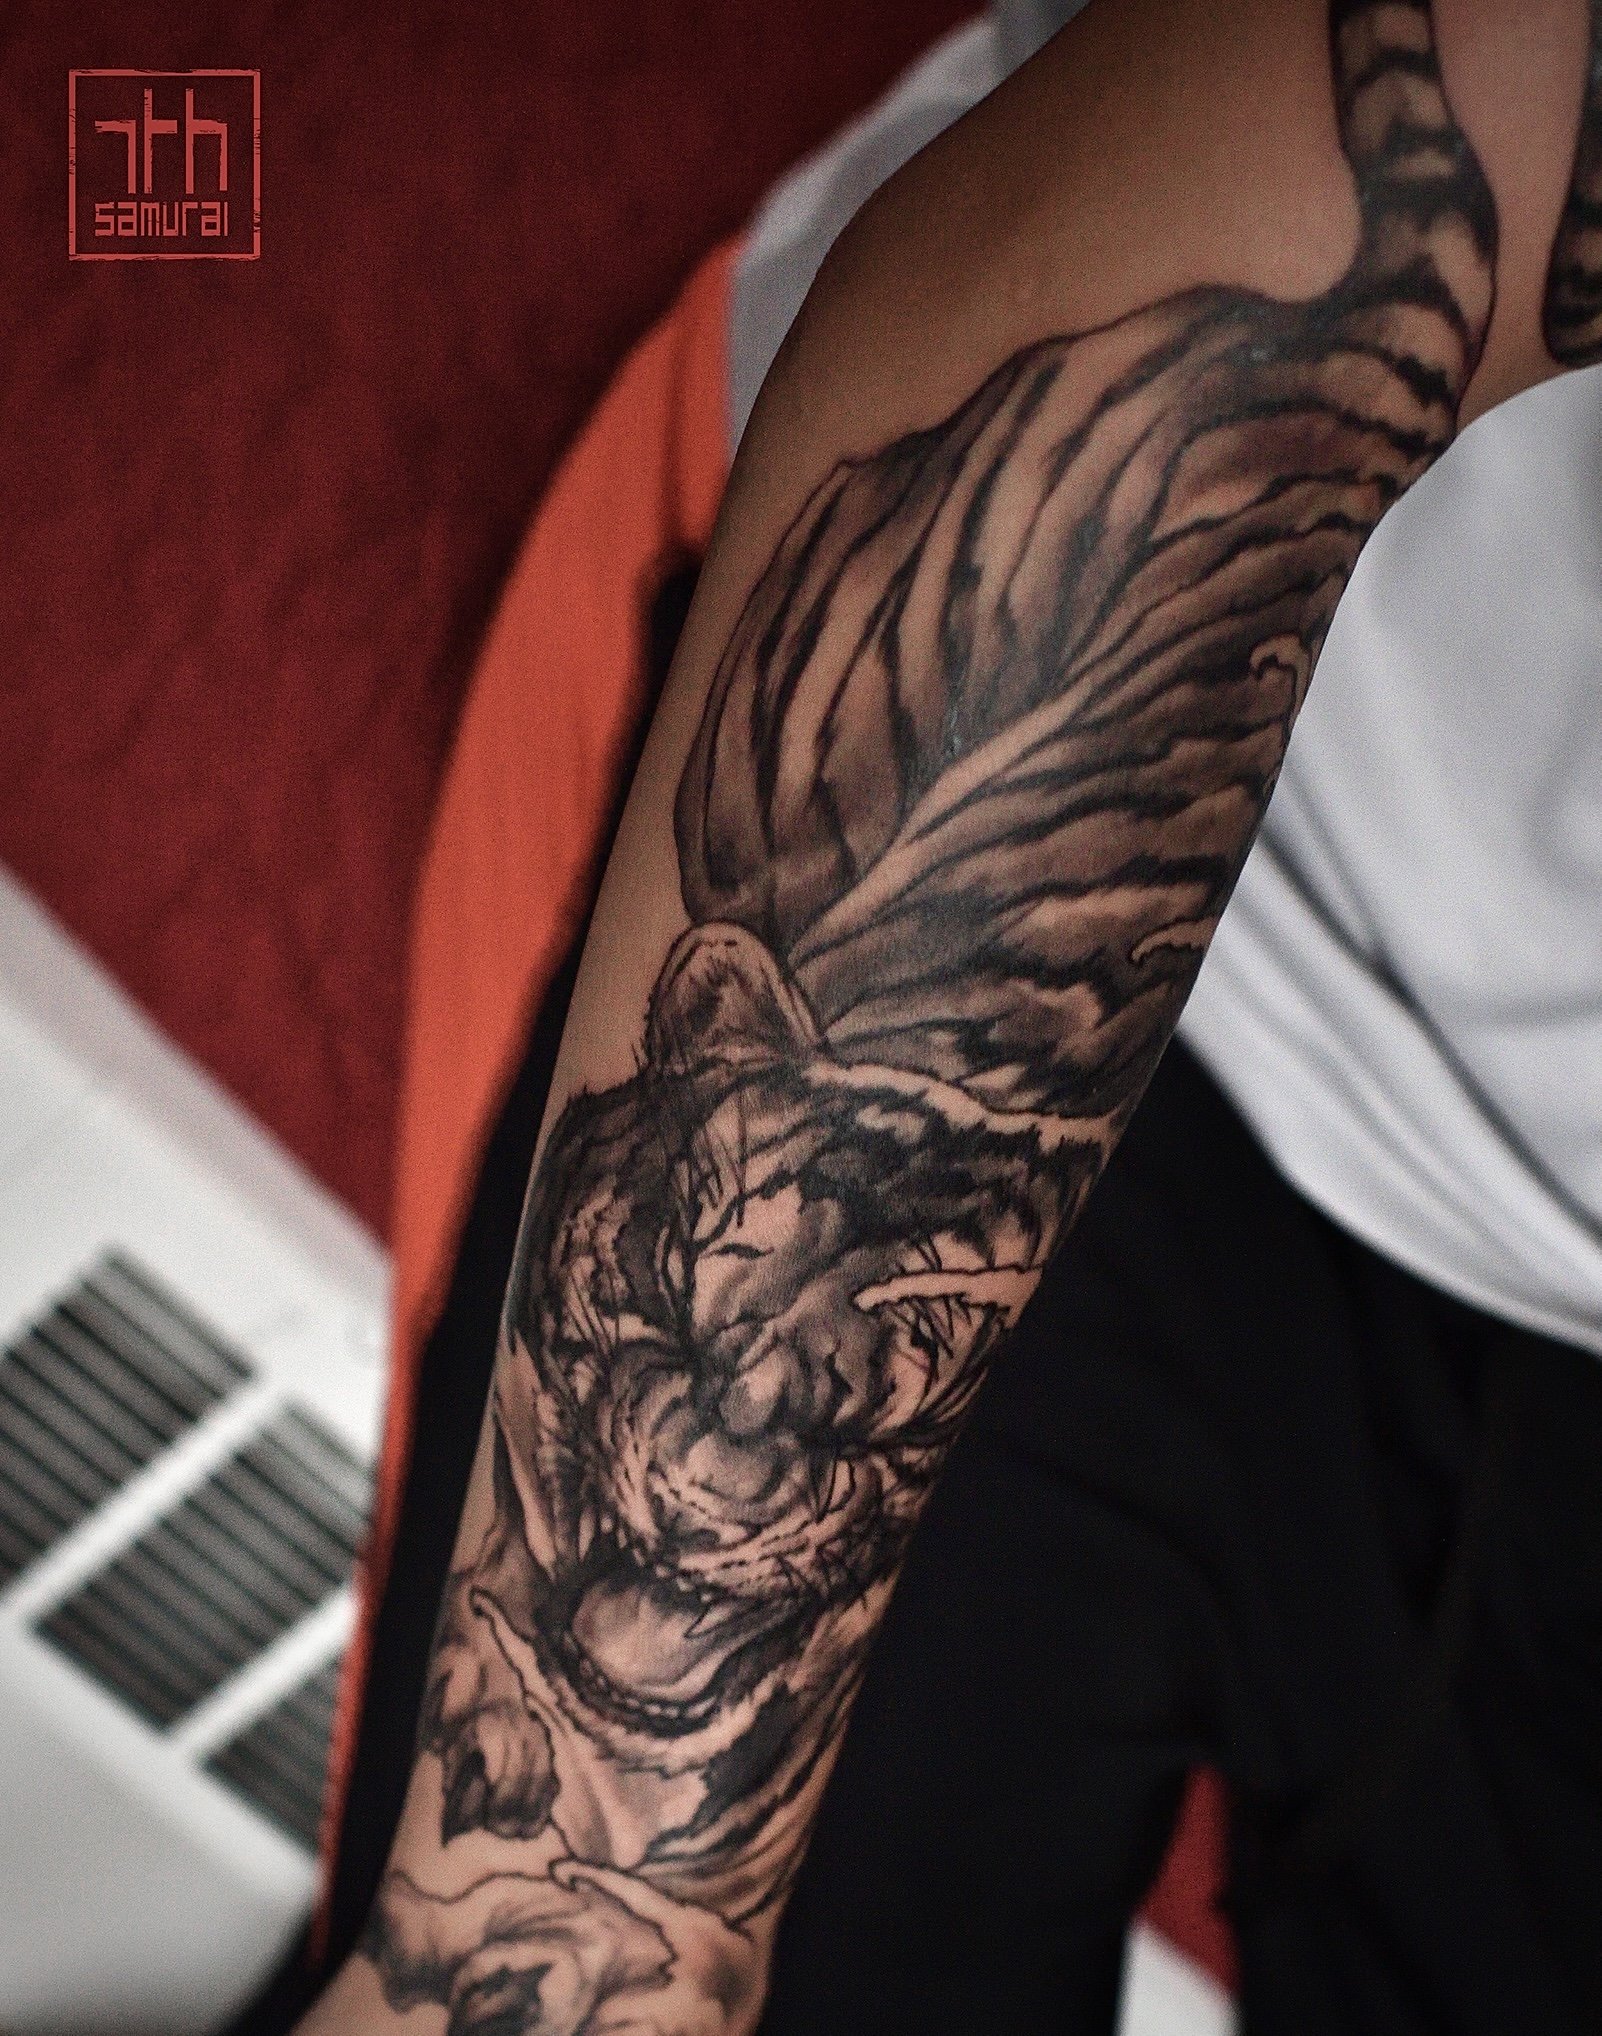 aggressive growling tiger  Men's asian forearm tattoo  asian tattoo artist: Kai at 7th Samurai. YEG Edmonton, Alberta, Canada best 2023